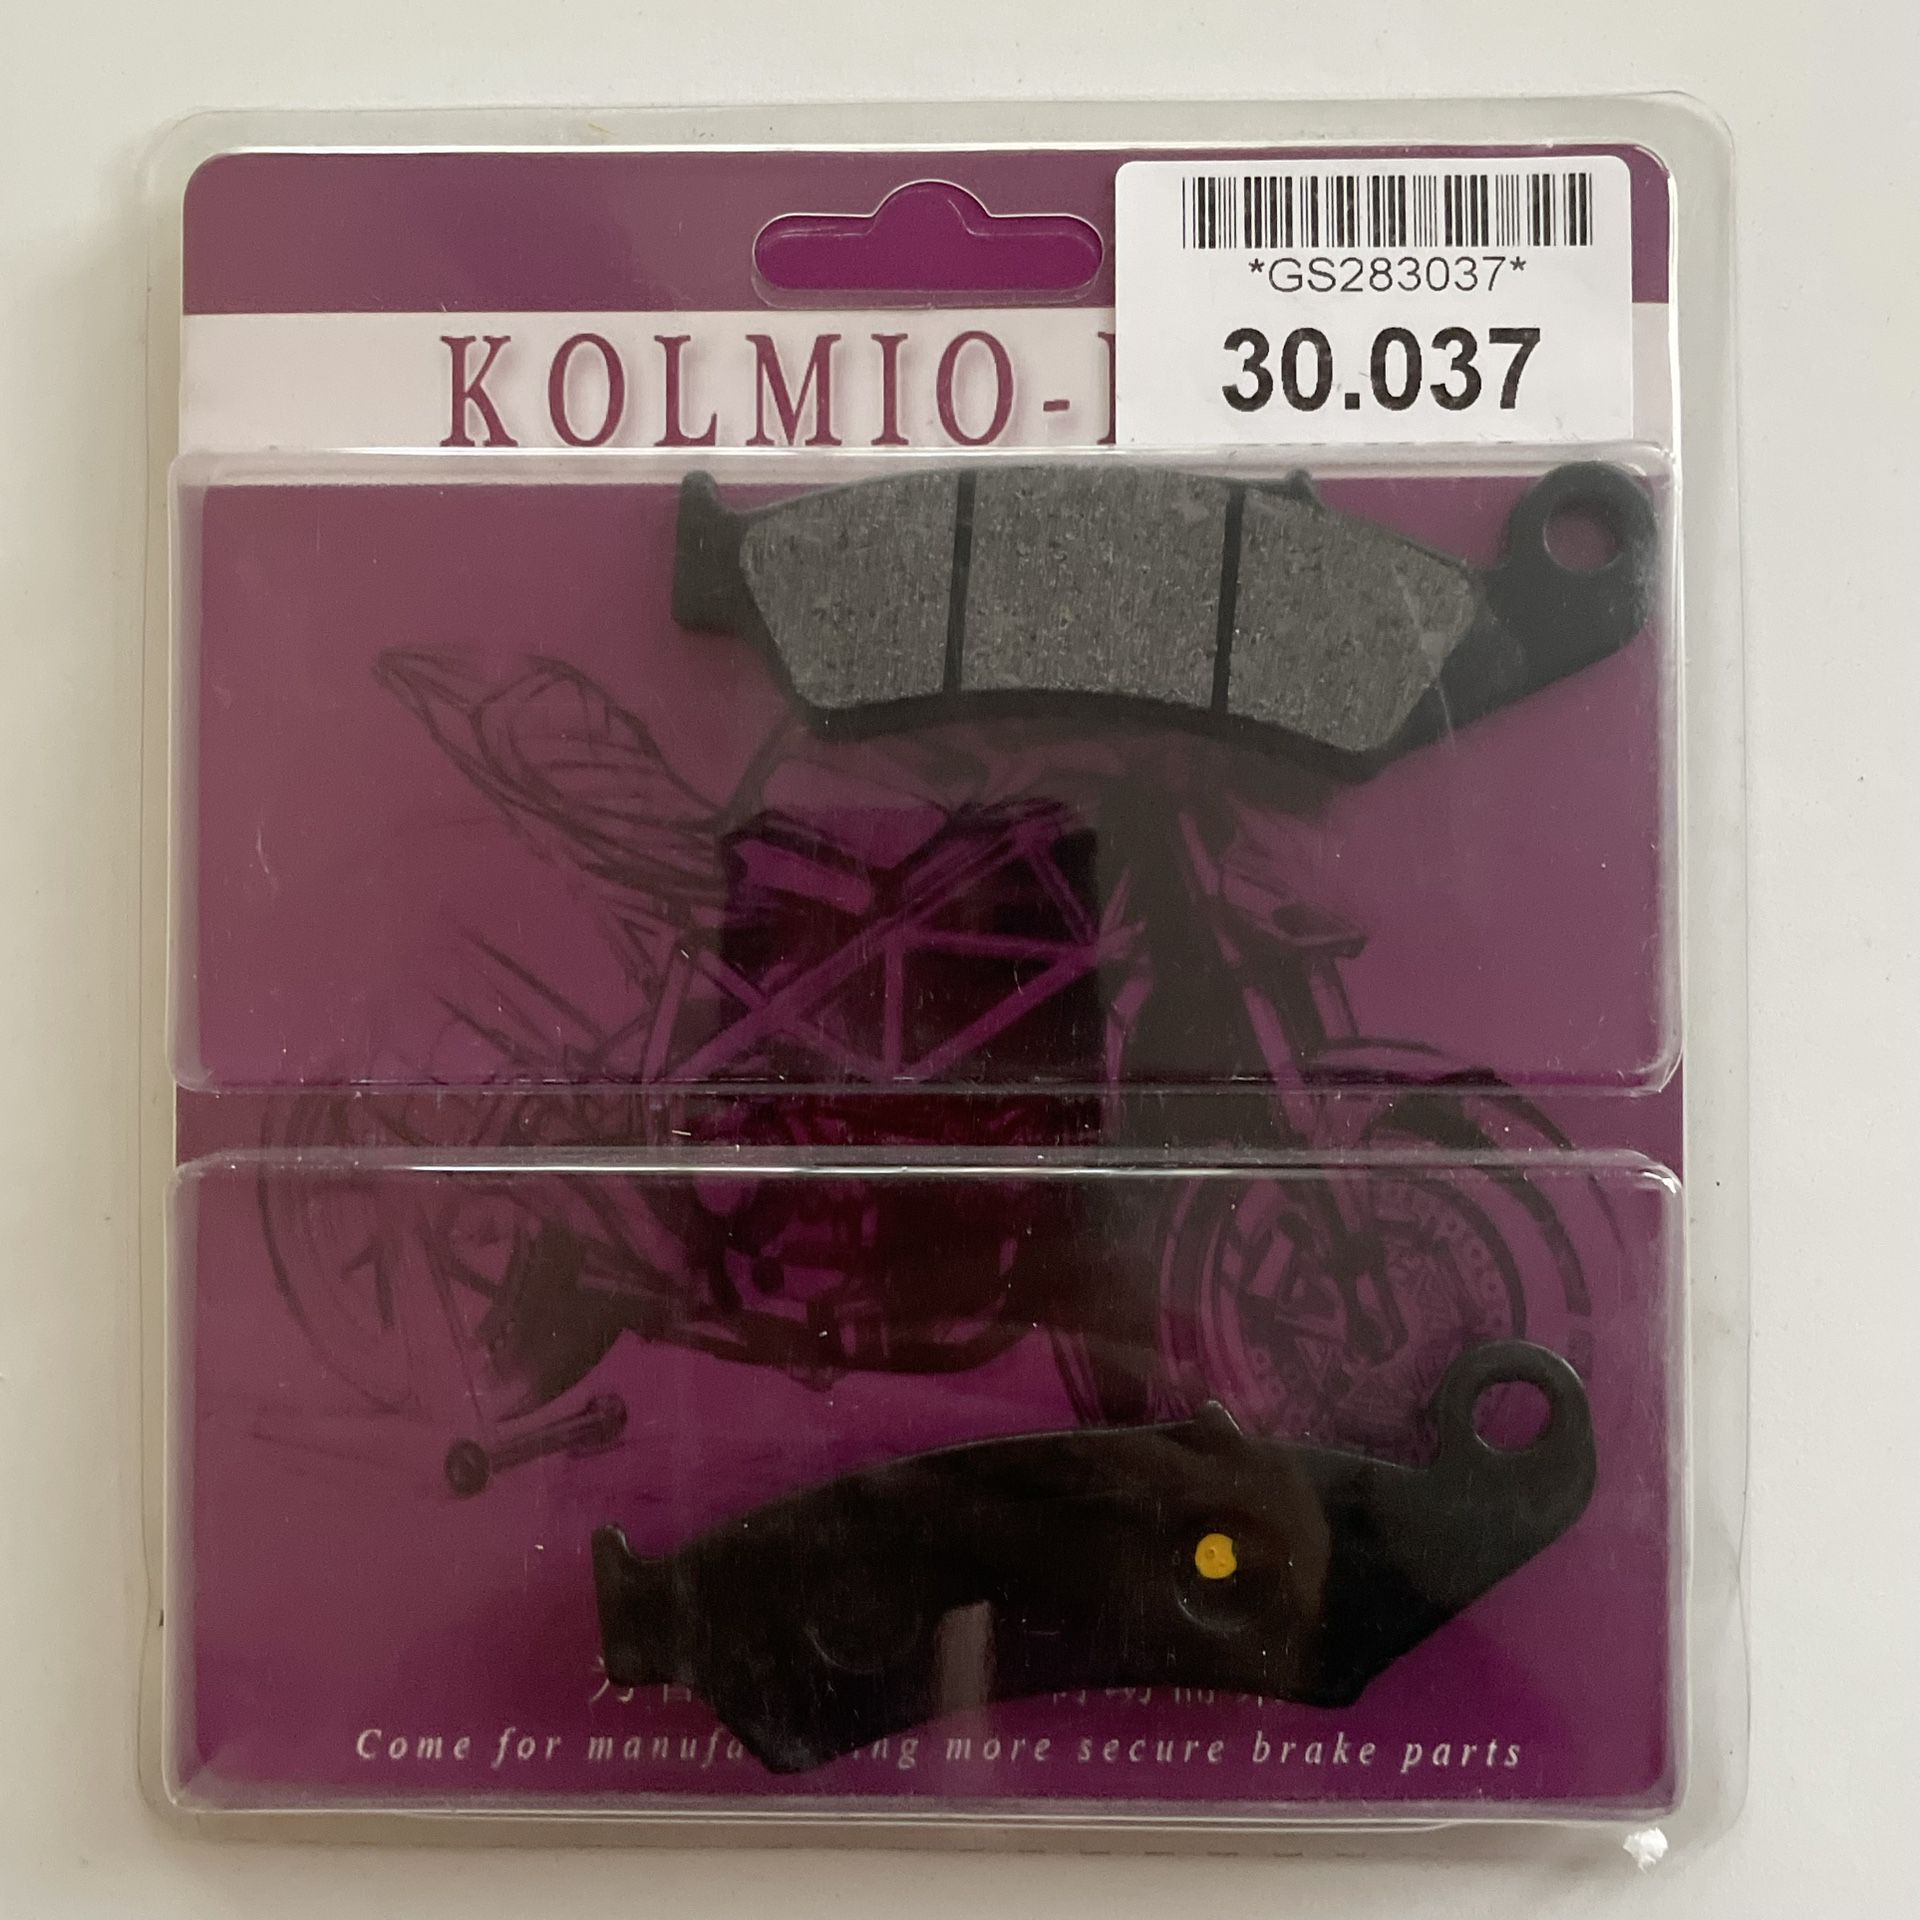 Kolmio-LAM Mototcycle Brake Pads Metal Ceramic